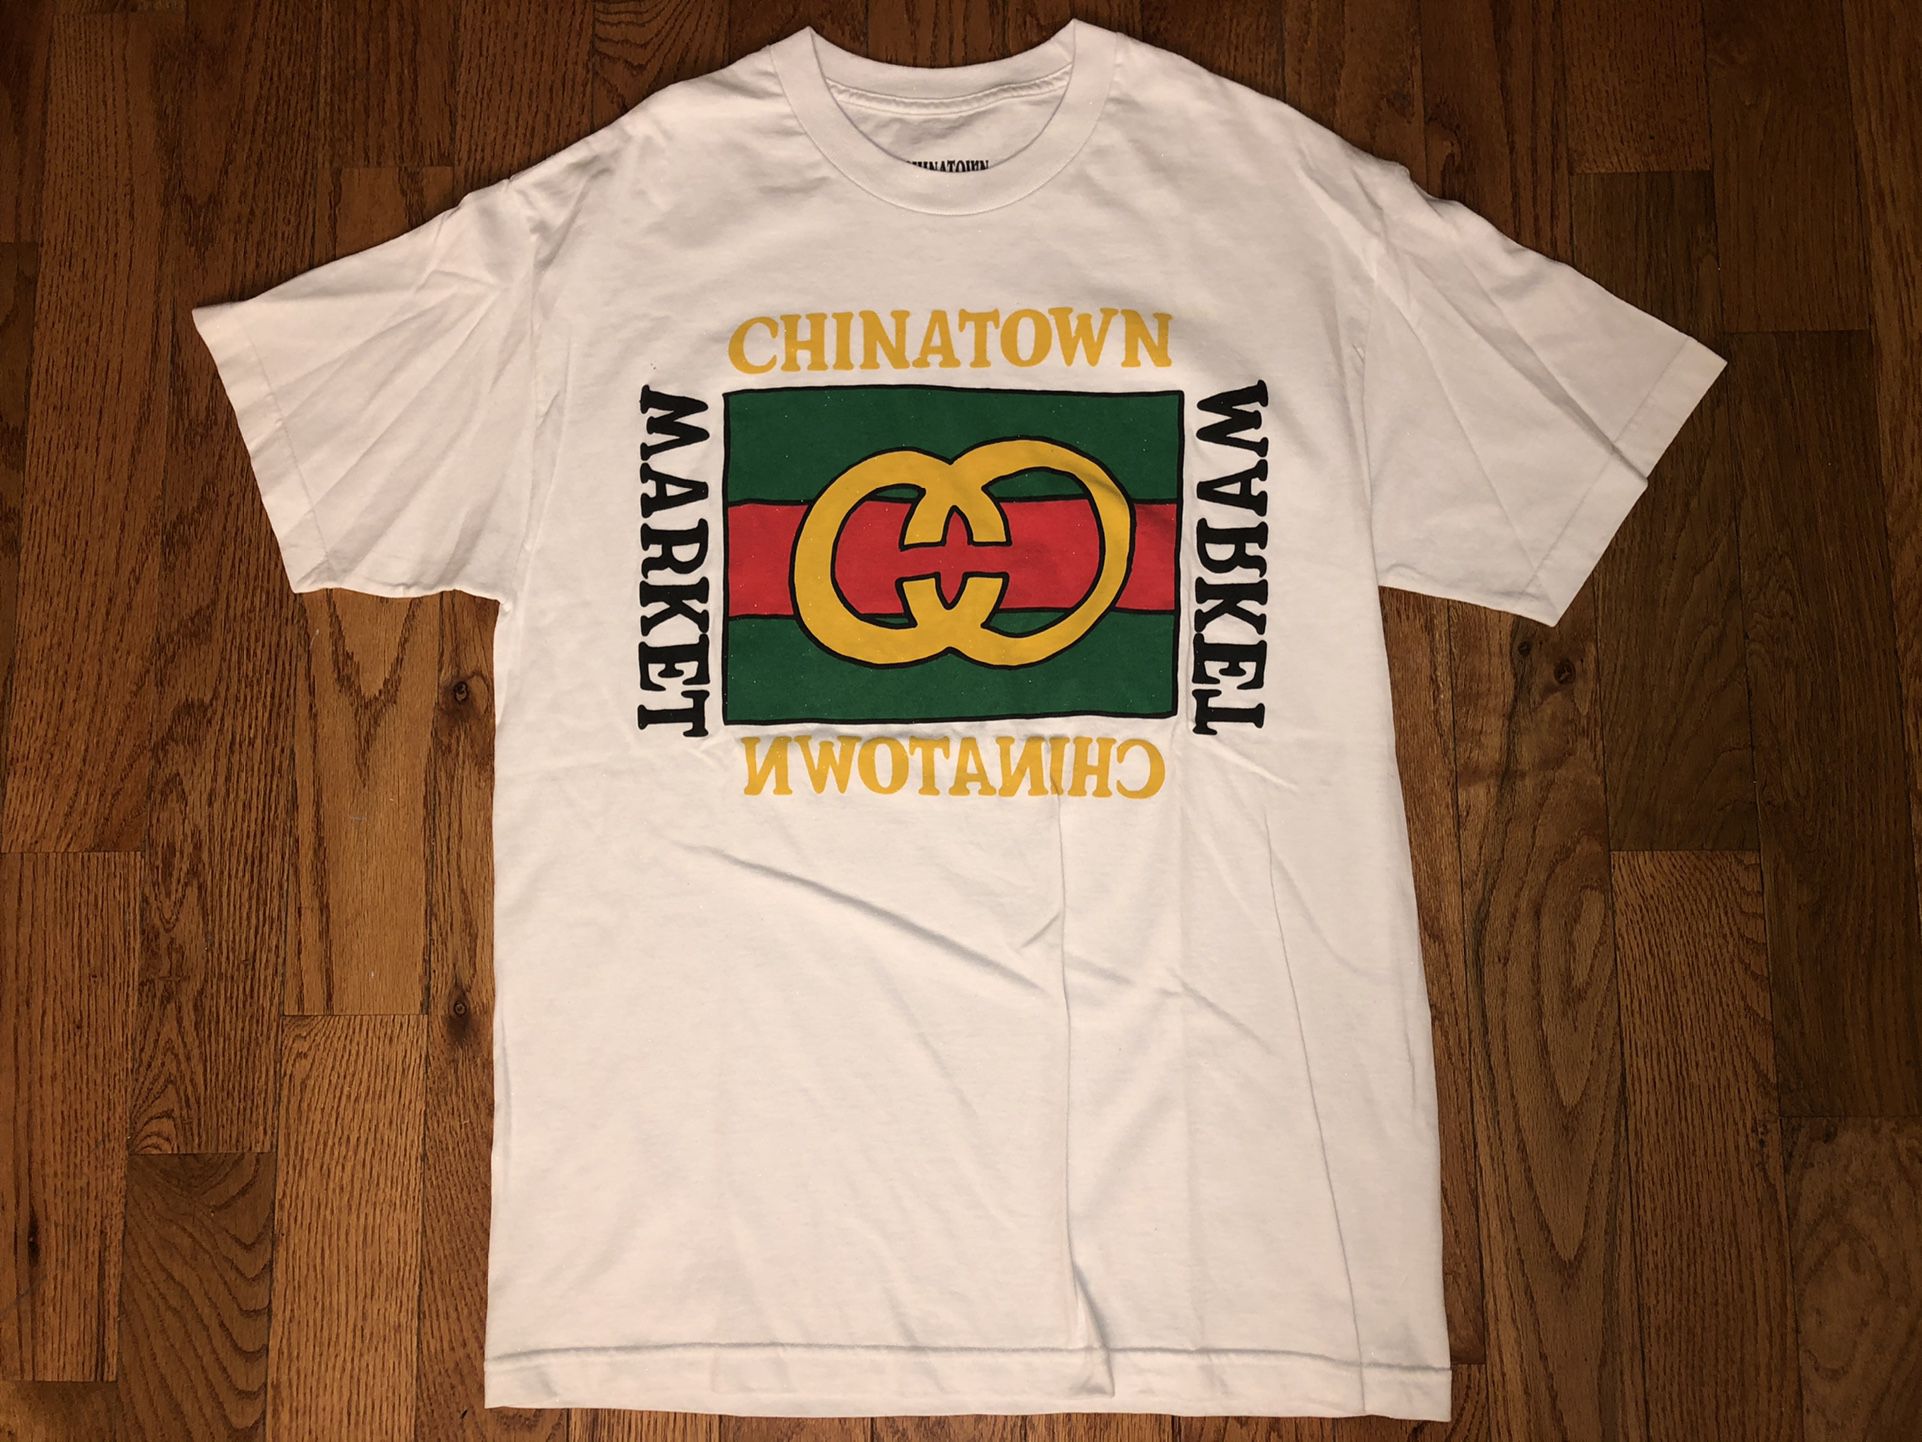 Chinatown Market X Gucci Limited T-Shirt Sz Large